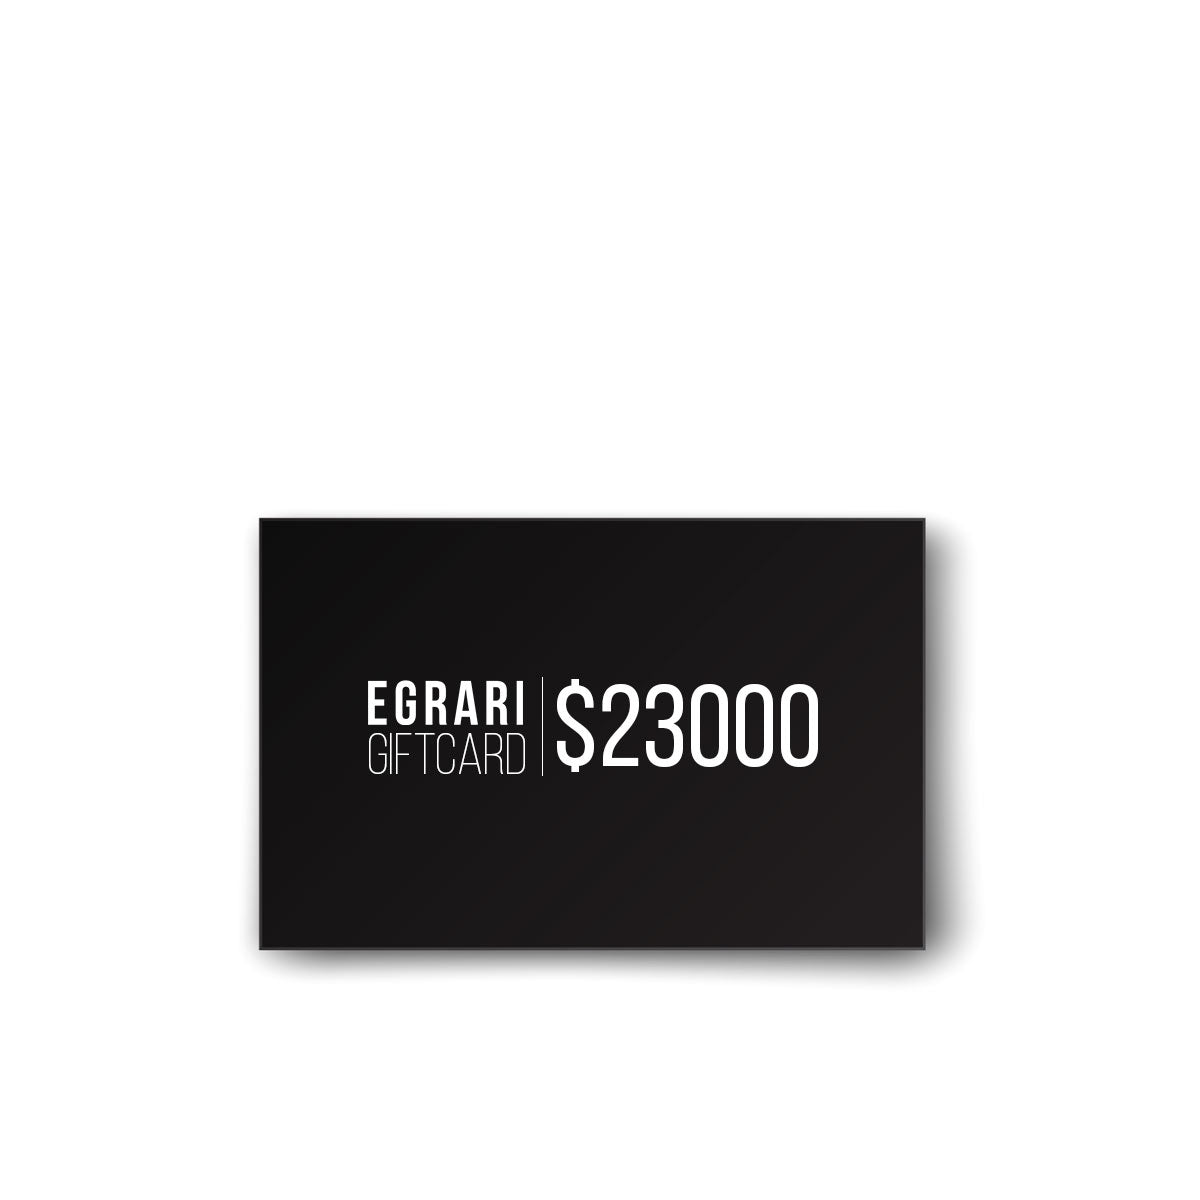 Egrari Night of Beauty gift card save $3000